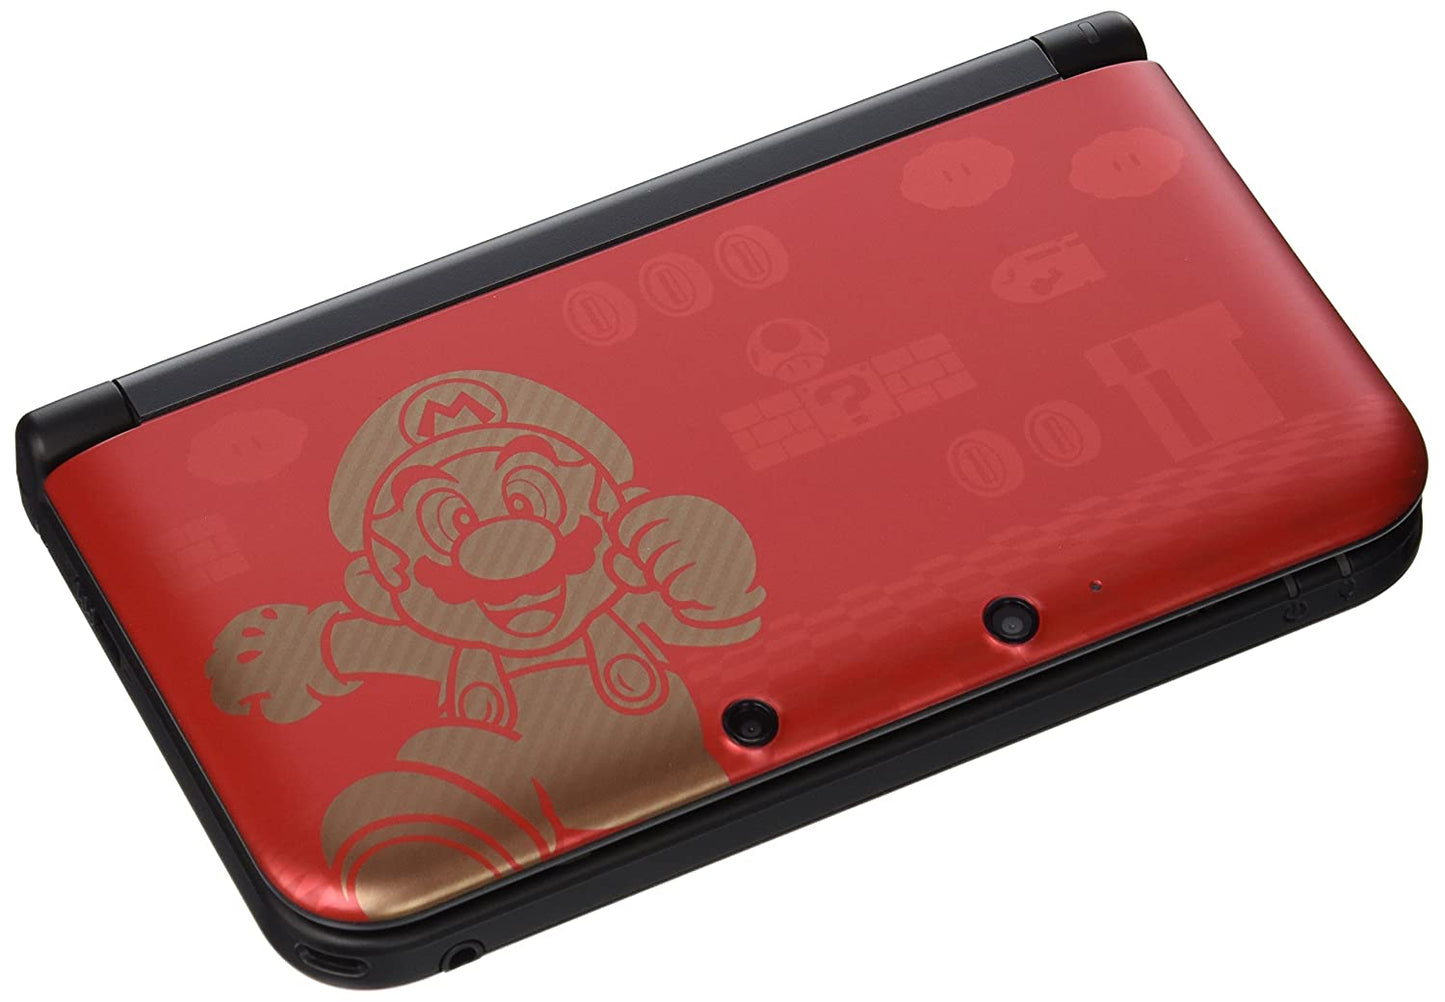 Nintendo 3DS XL New Super Mario Bros 2 Limited Edition